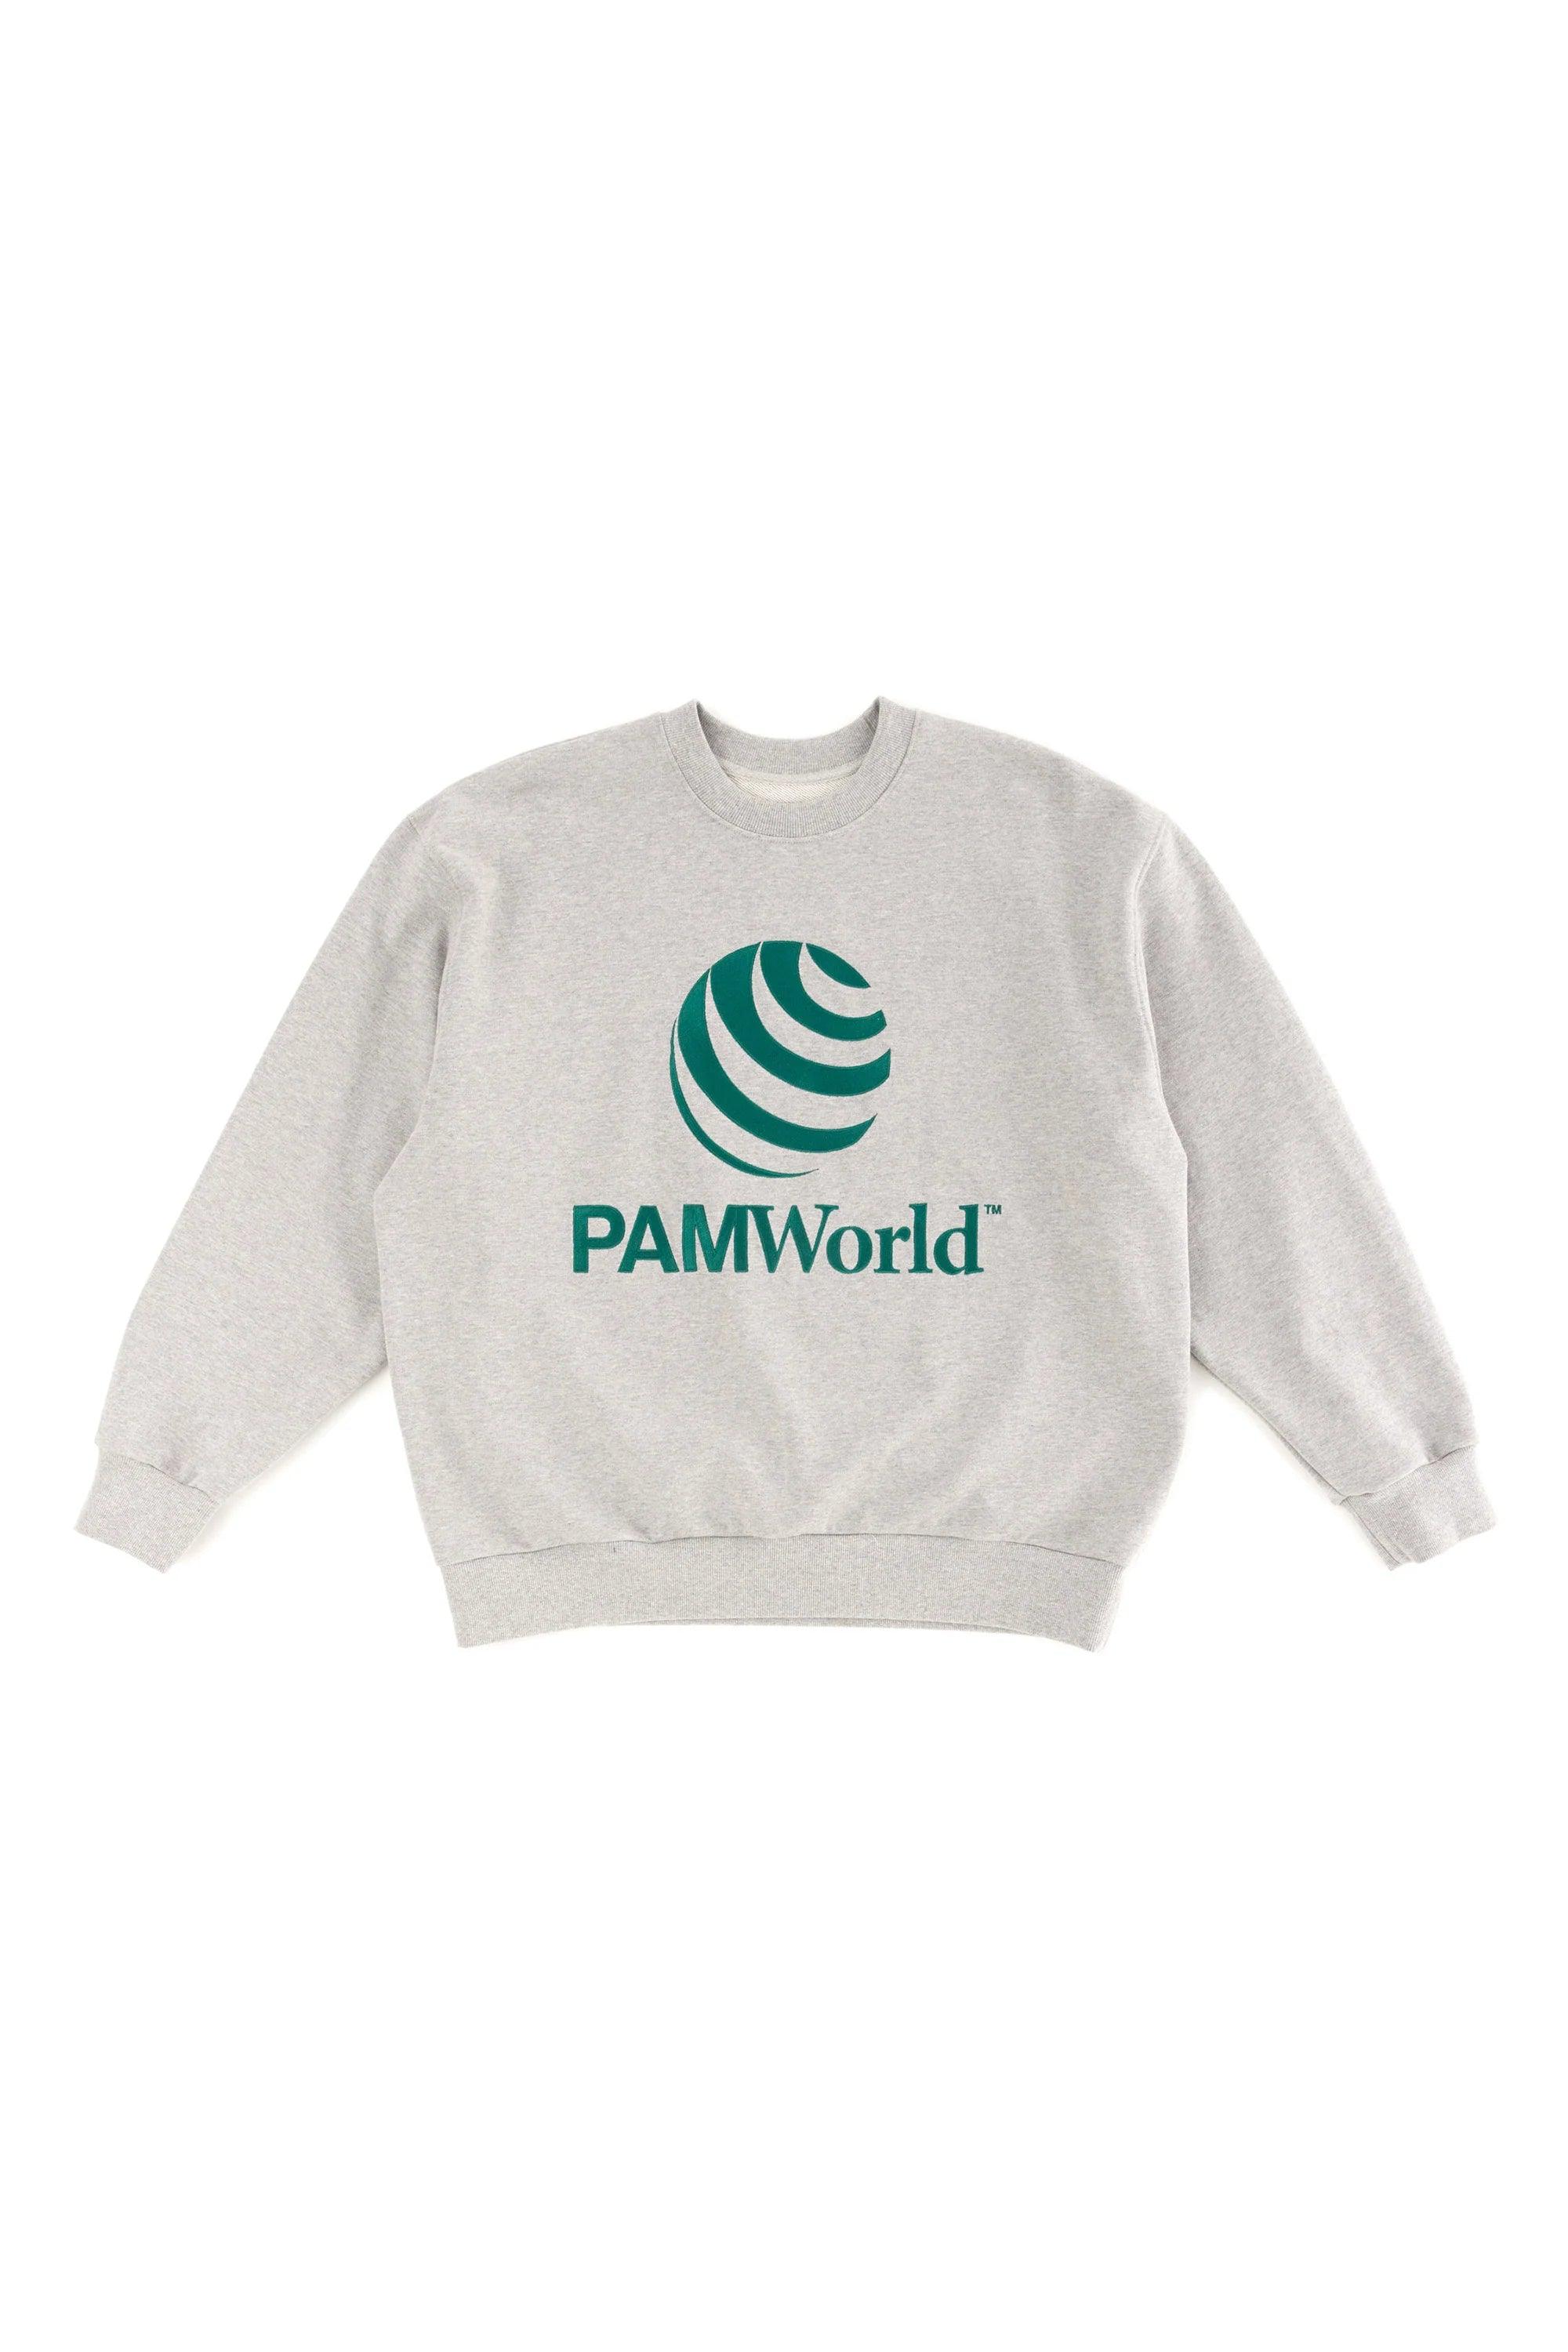 PAM / Perks and Mini - World Crew Neck - Grey Marble -